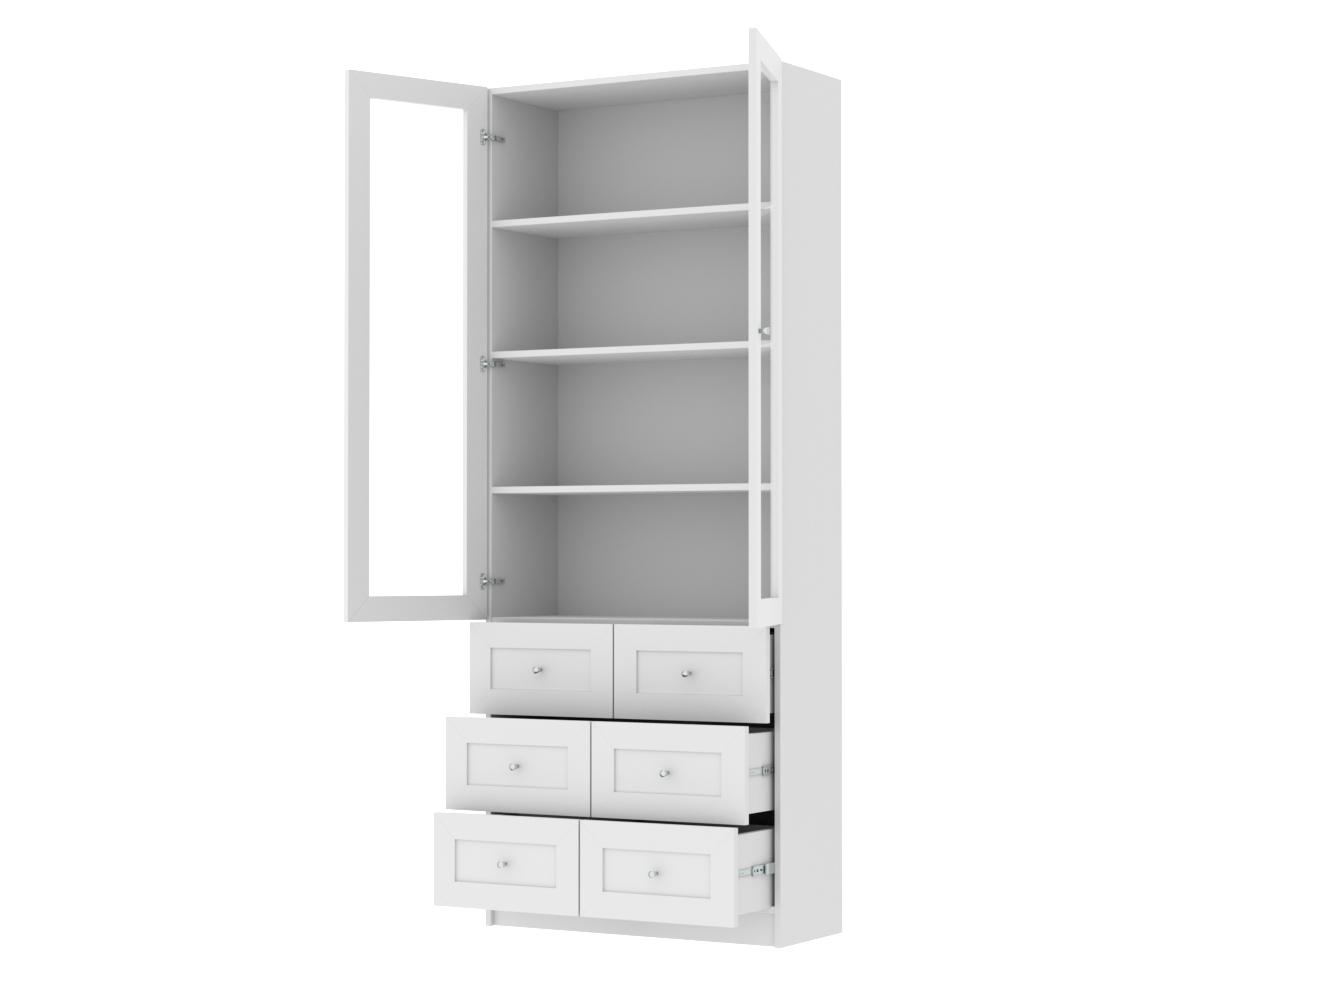 Книжный шкаф Билли 317 white ИКЕА (IKEA) изображение товара